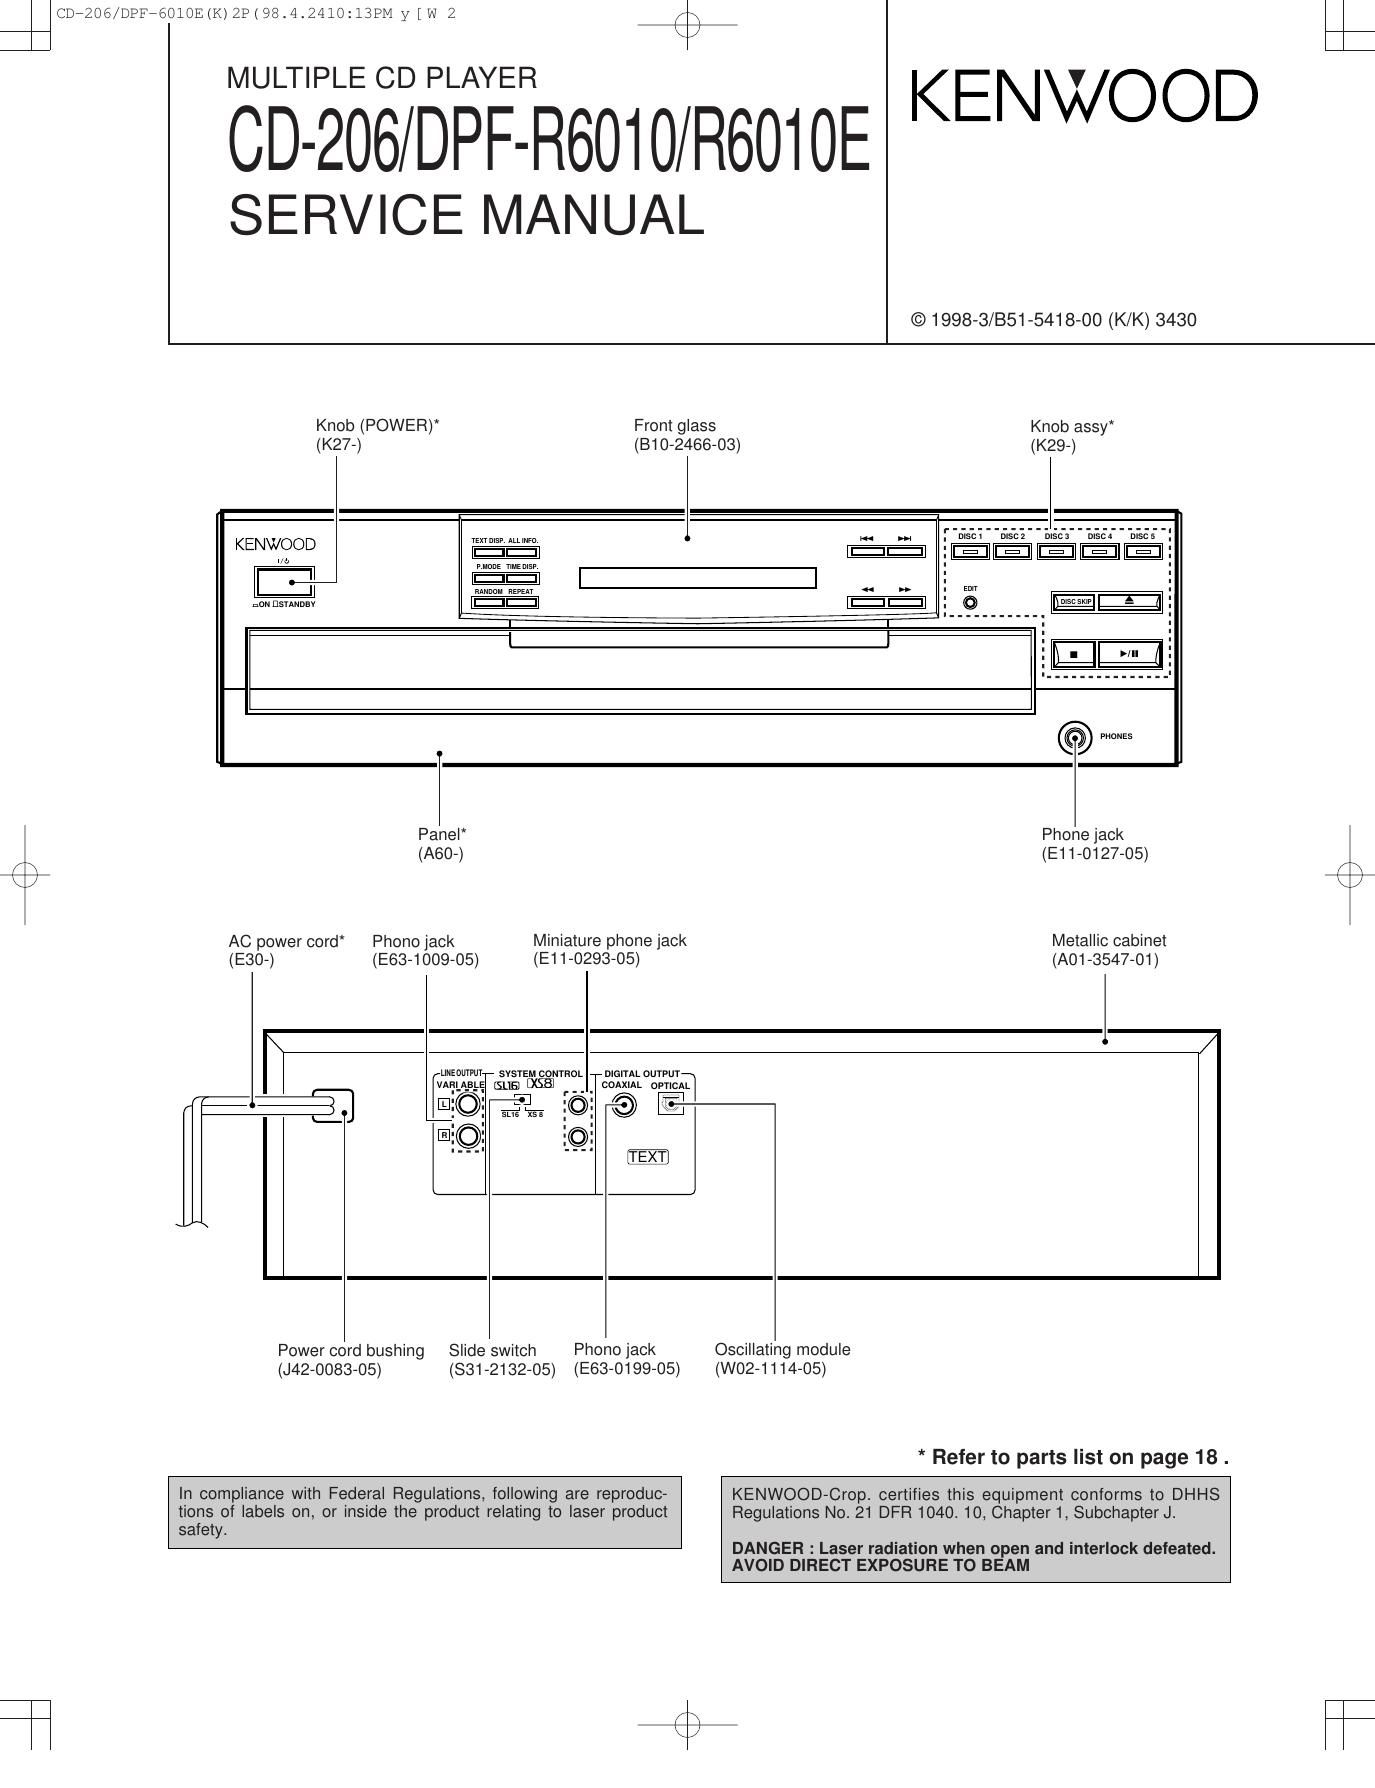 Kenwood CD 206 DPF Service Manual